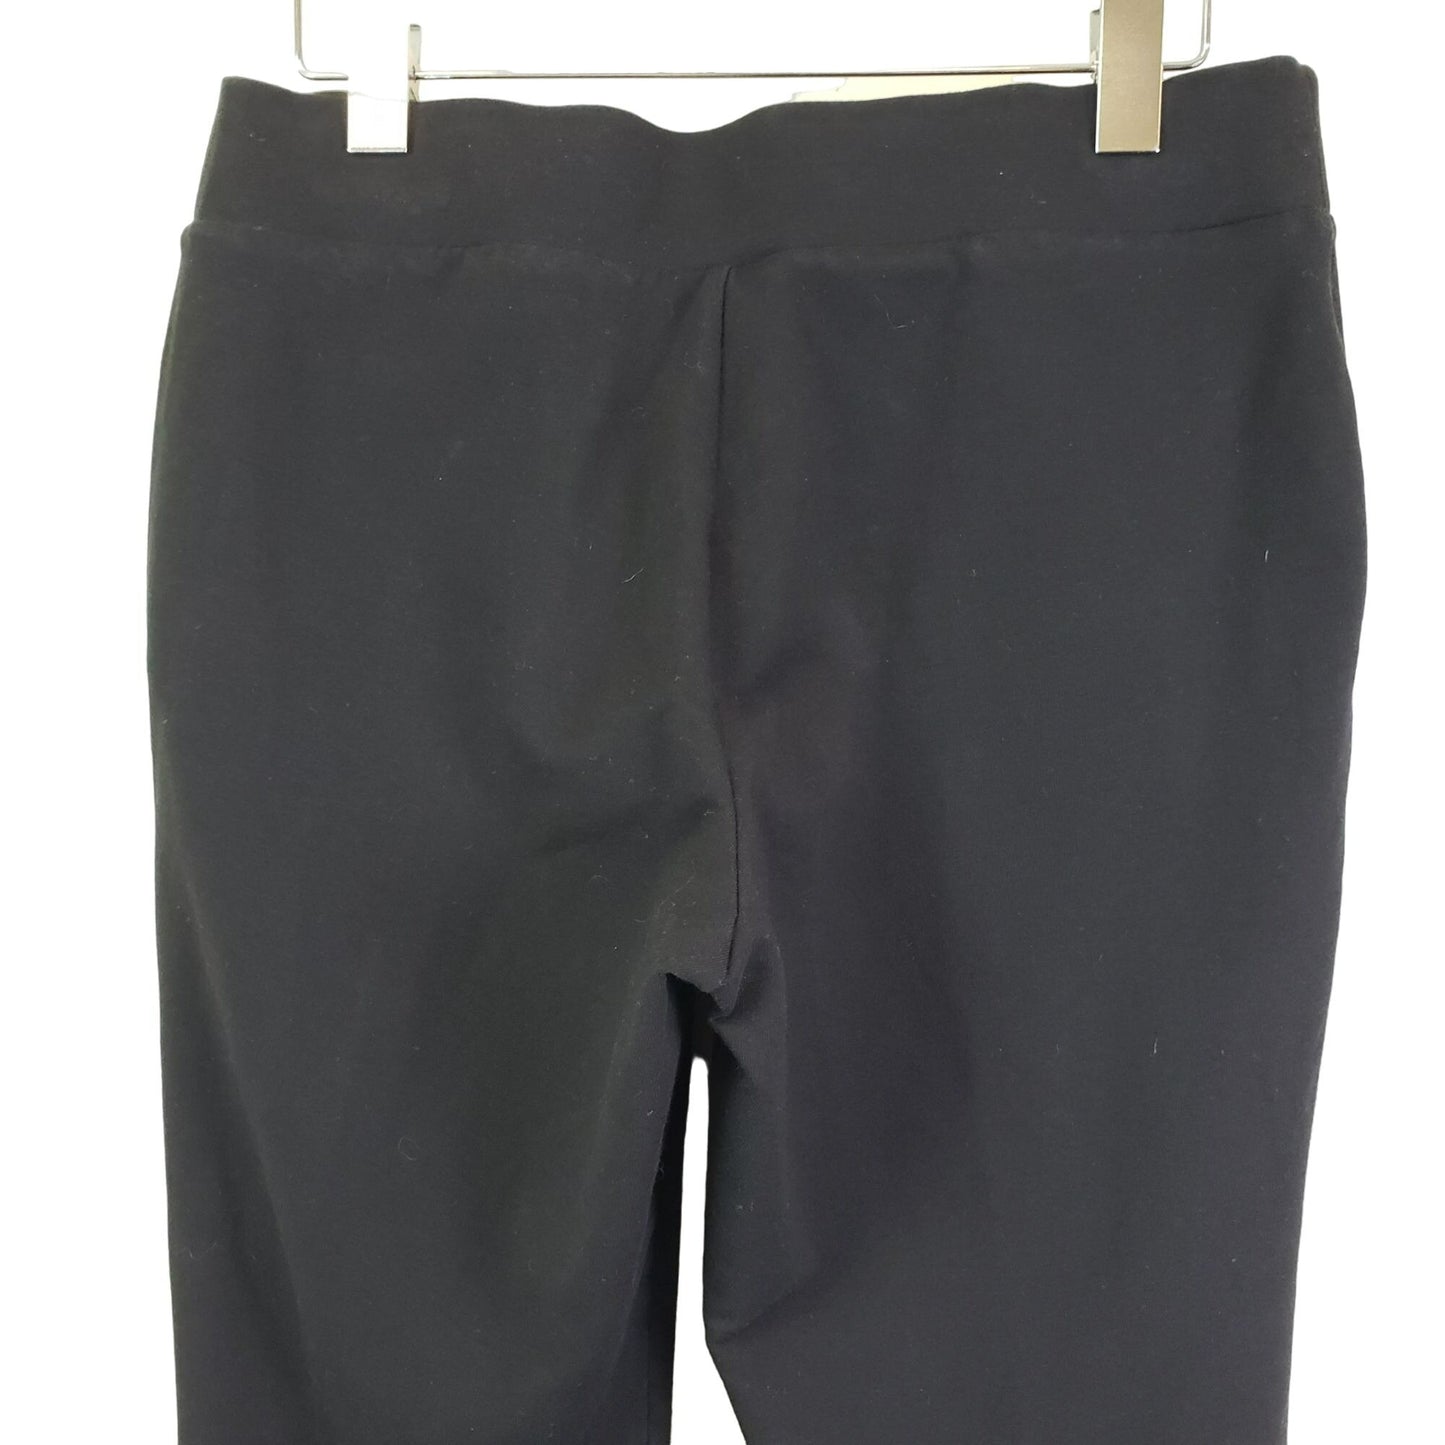 Pure Jill J. Jill Slim Leg Cotton Blend Casual Pants Size 2 Petite